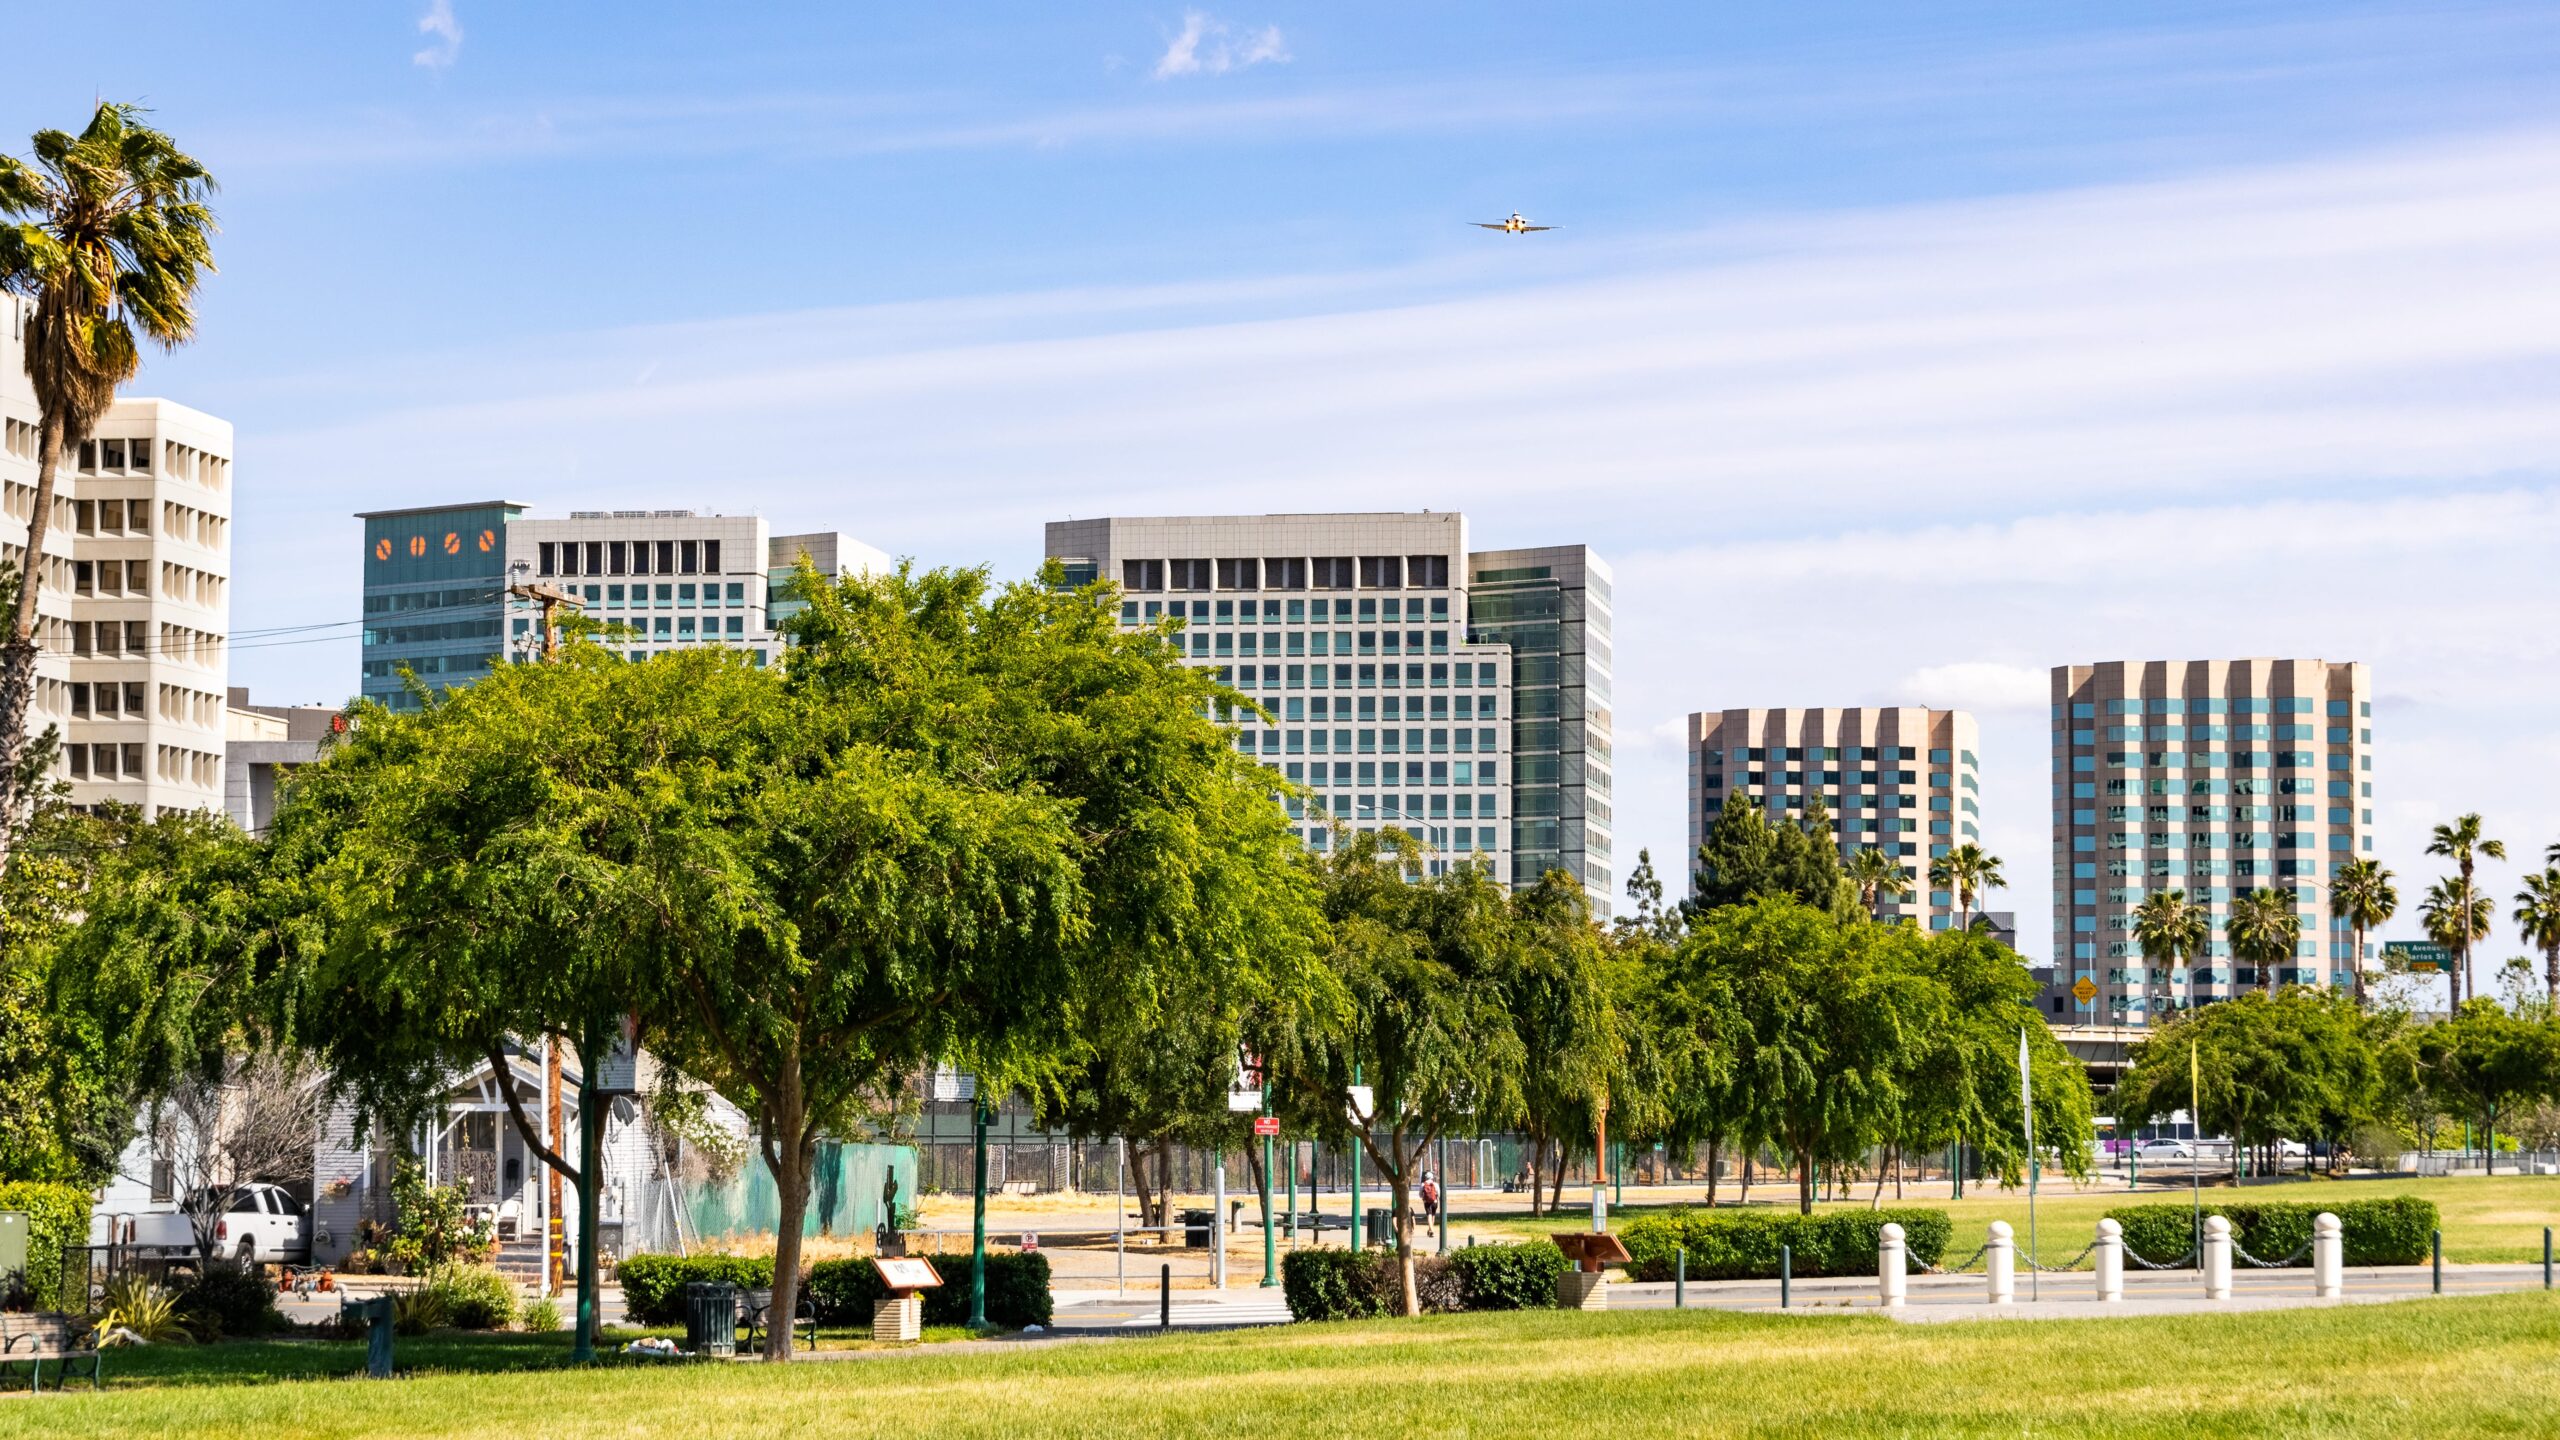 Park view of Downtown San Jose showcasing high-rise buildings through a lush public park.